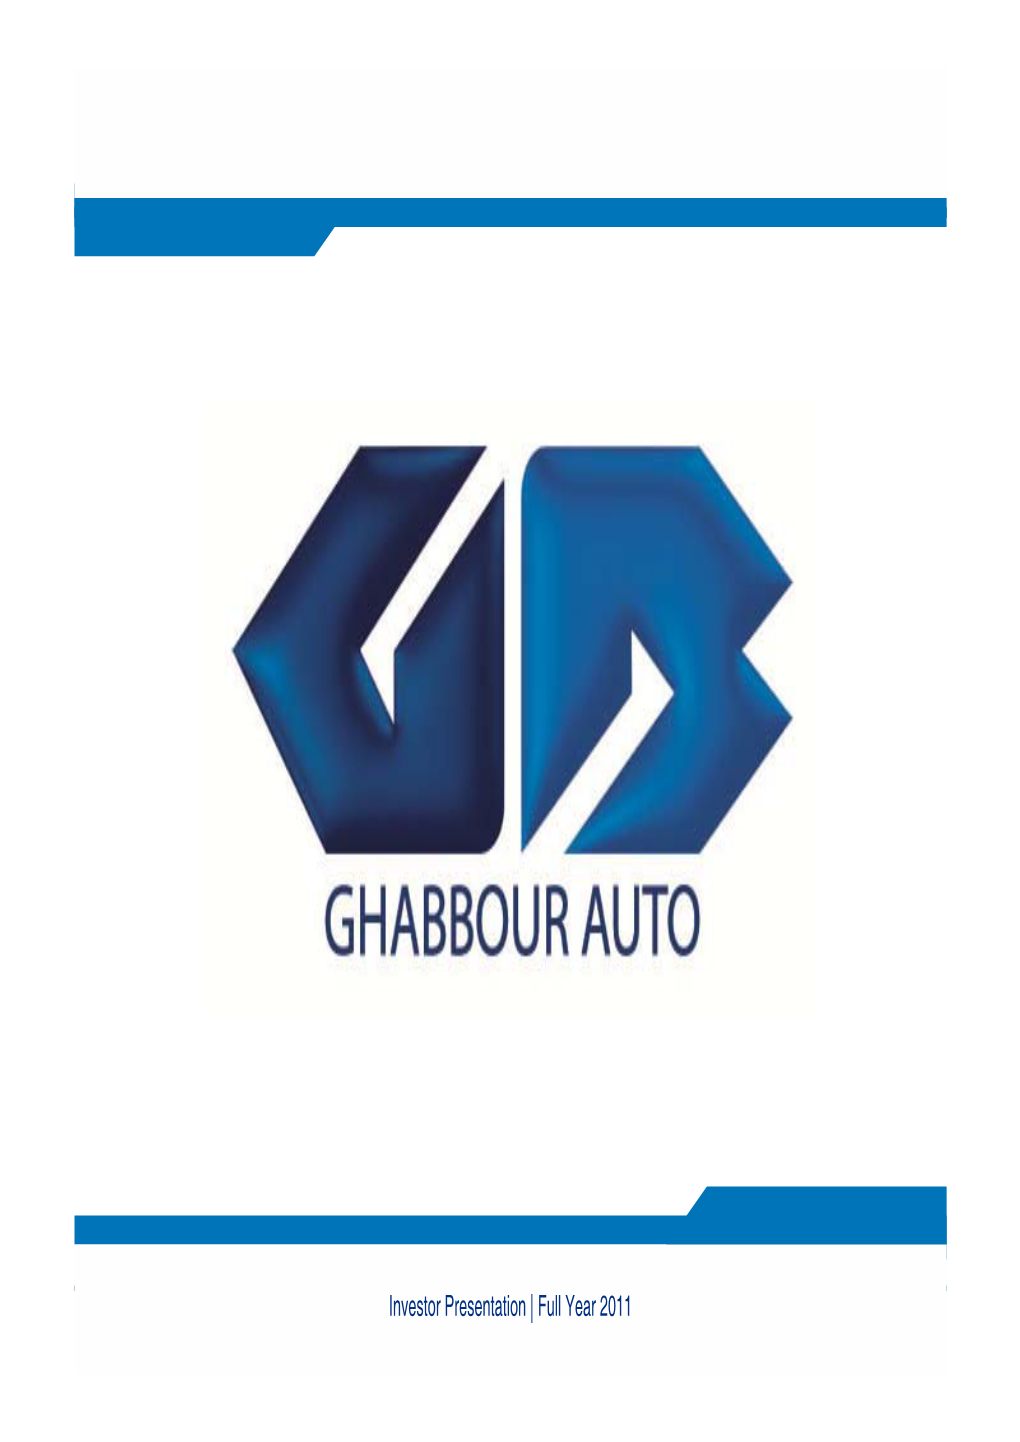 GB Auto Investor Presentation